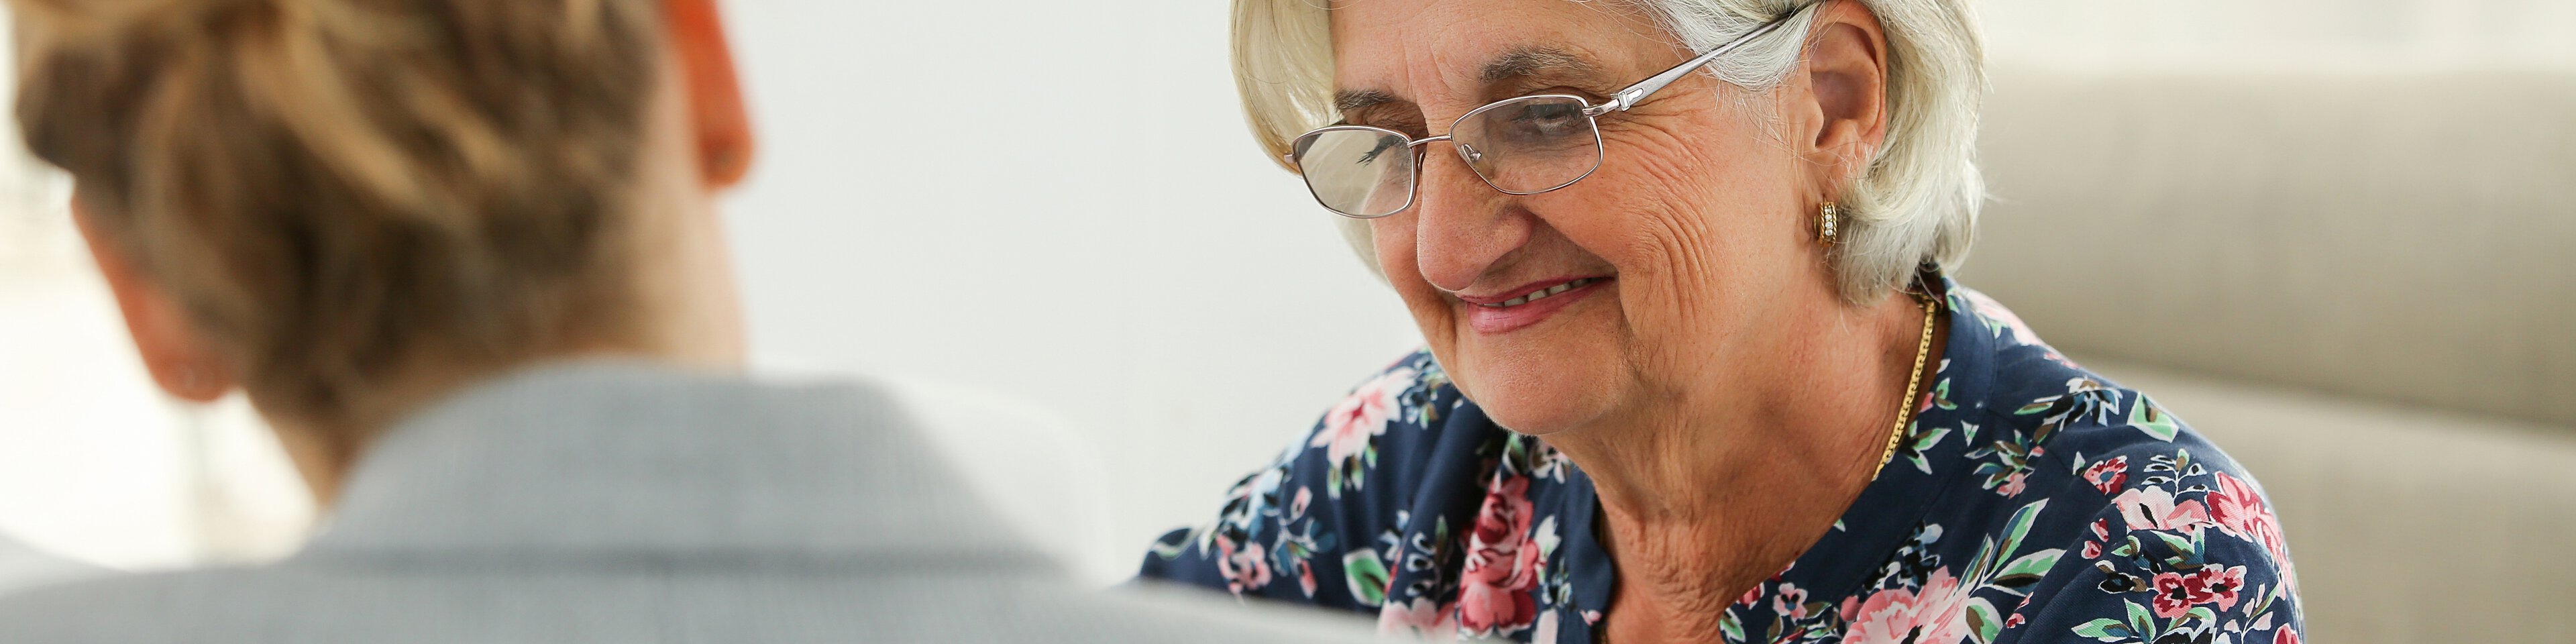 Ältere Frau lässt sich beraten und lacht | © eric - stock.adobe.com